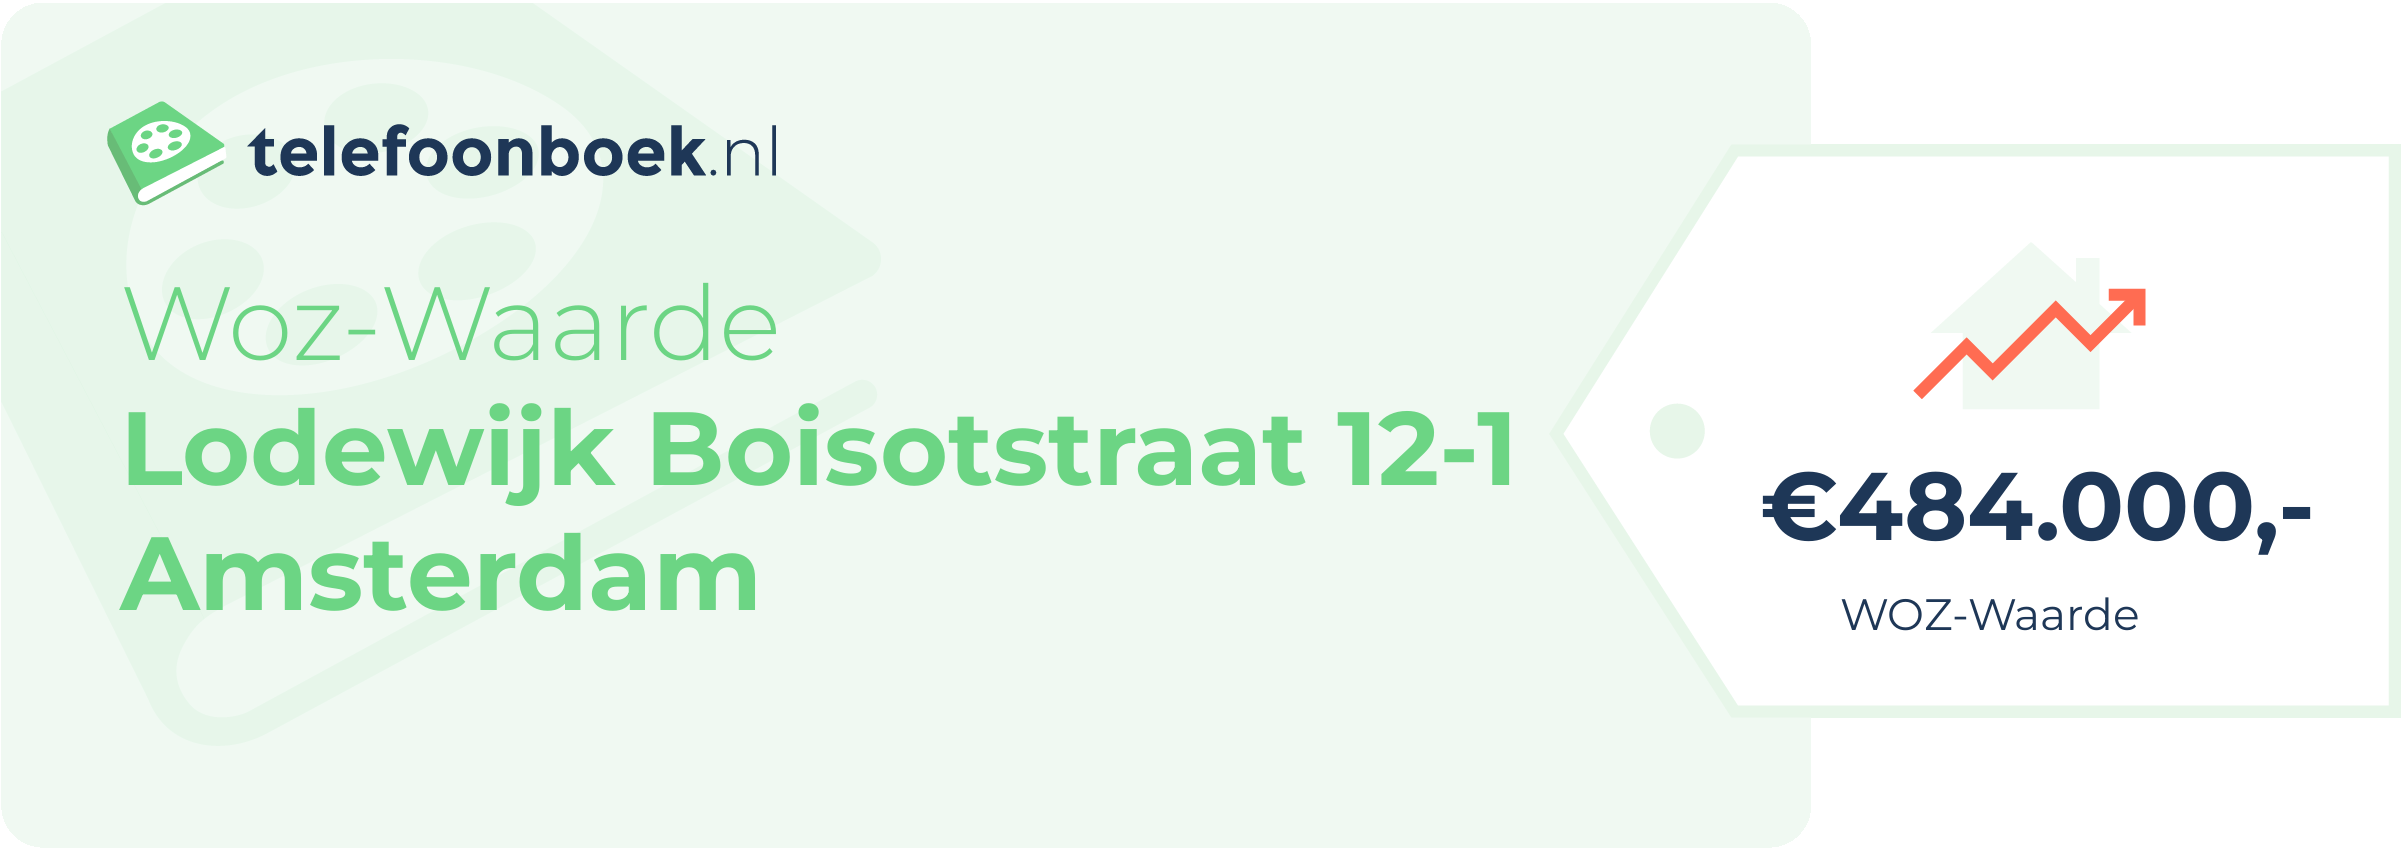 WOZ-waarde Lodewijk Boisotstraat 12-1 Amsterdam